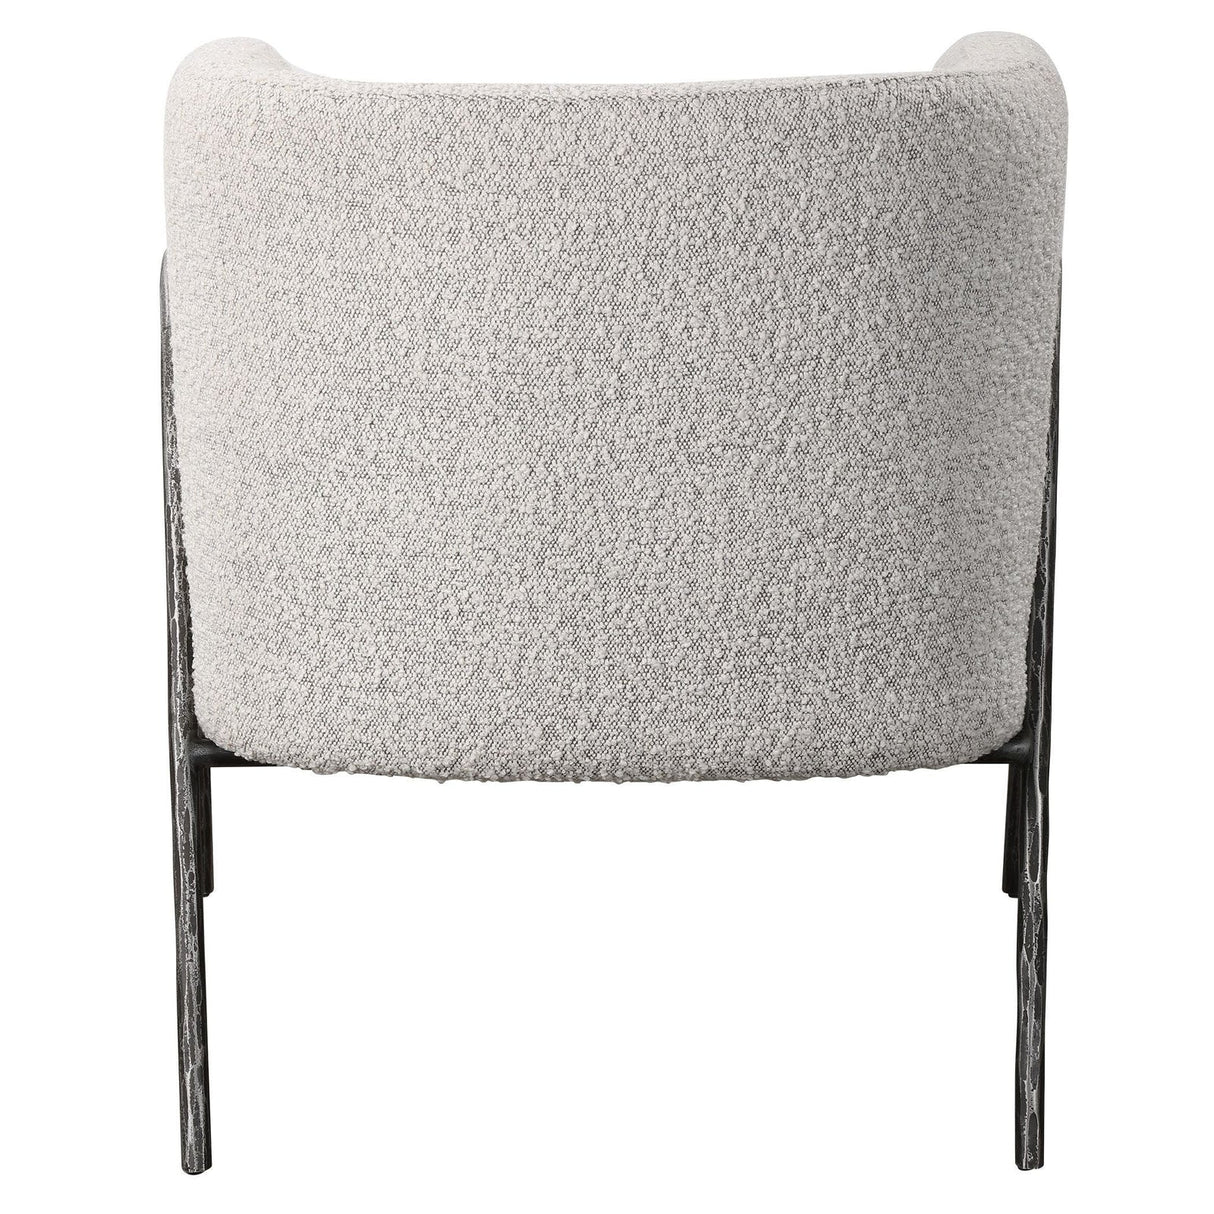 Uttermost Jacobsen Accent Chair - Home Elegance USA